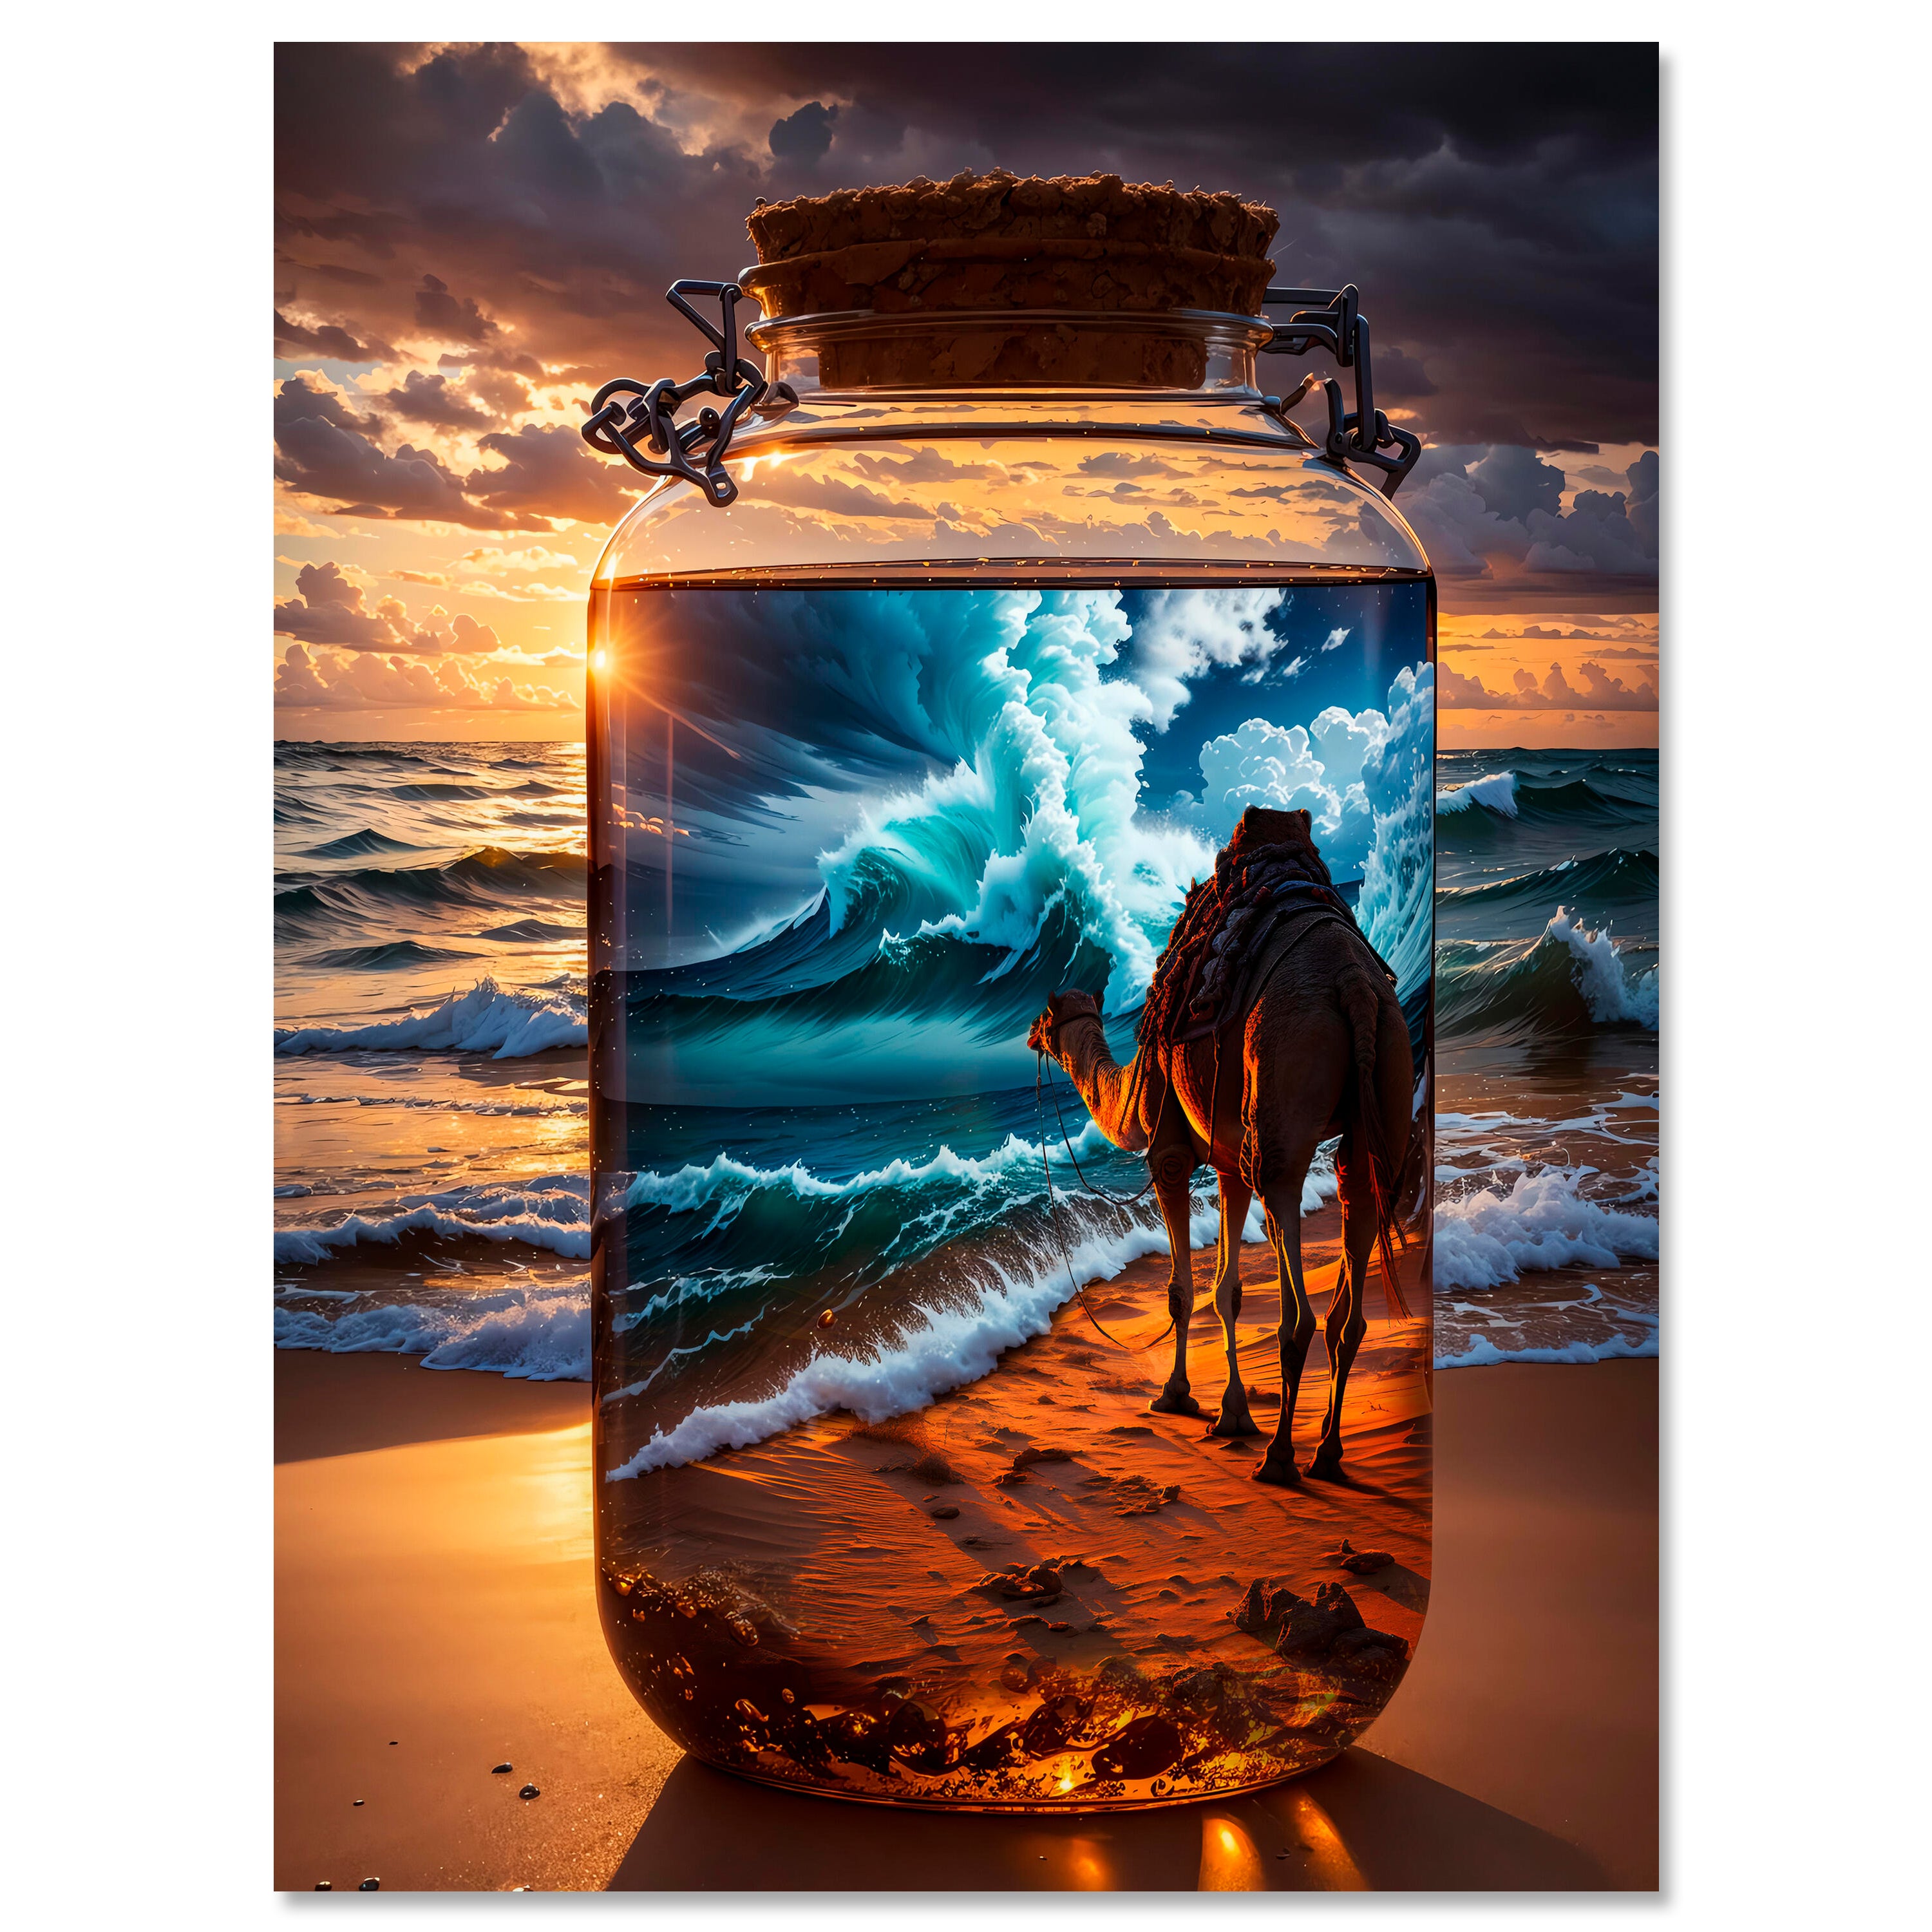 Leinwandbild Meer, Wasser, Flasche, Kamel M0823 kaufen - Bild 1